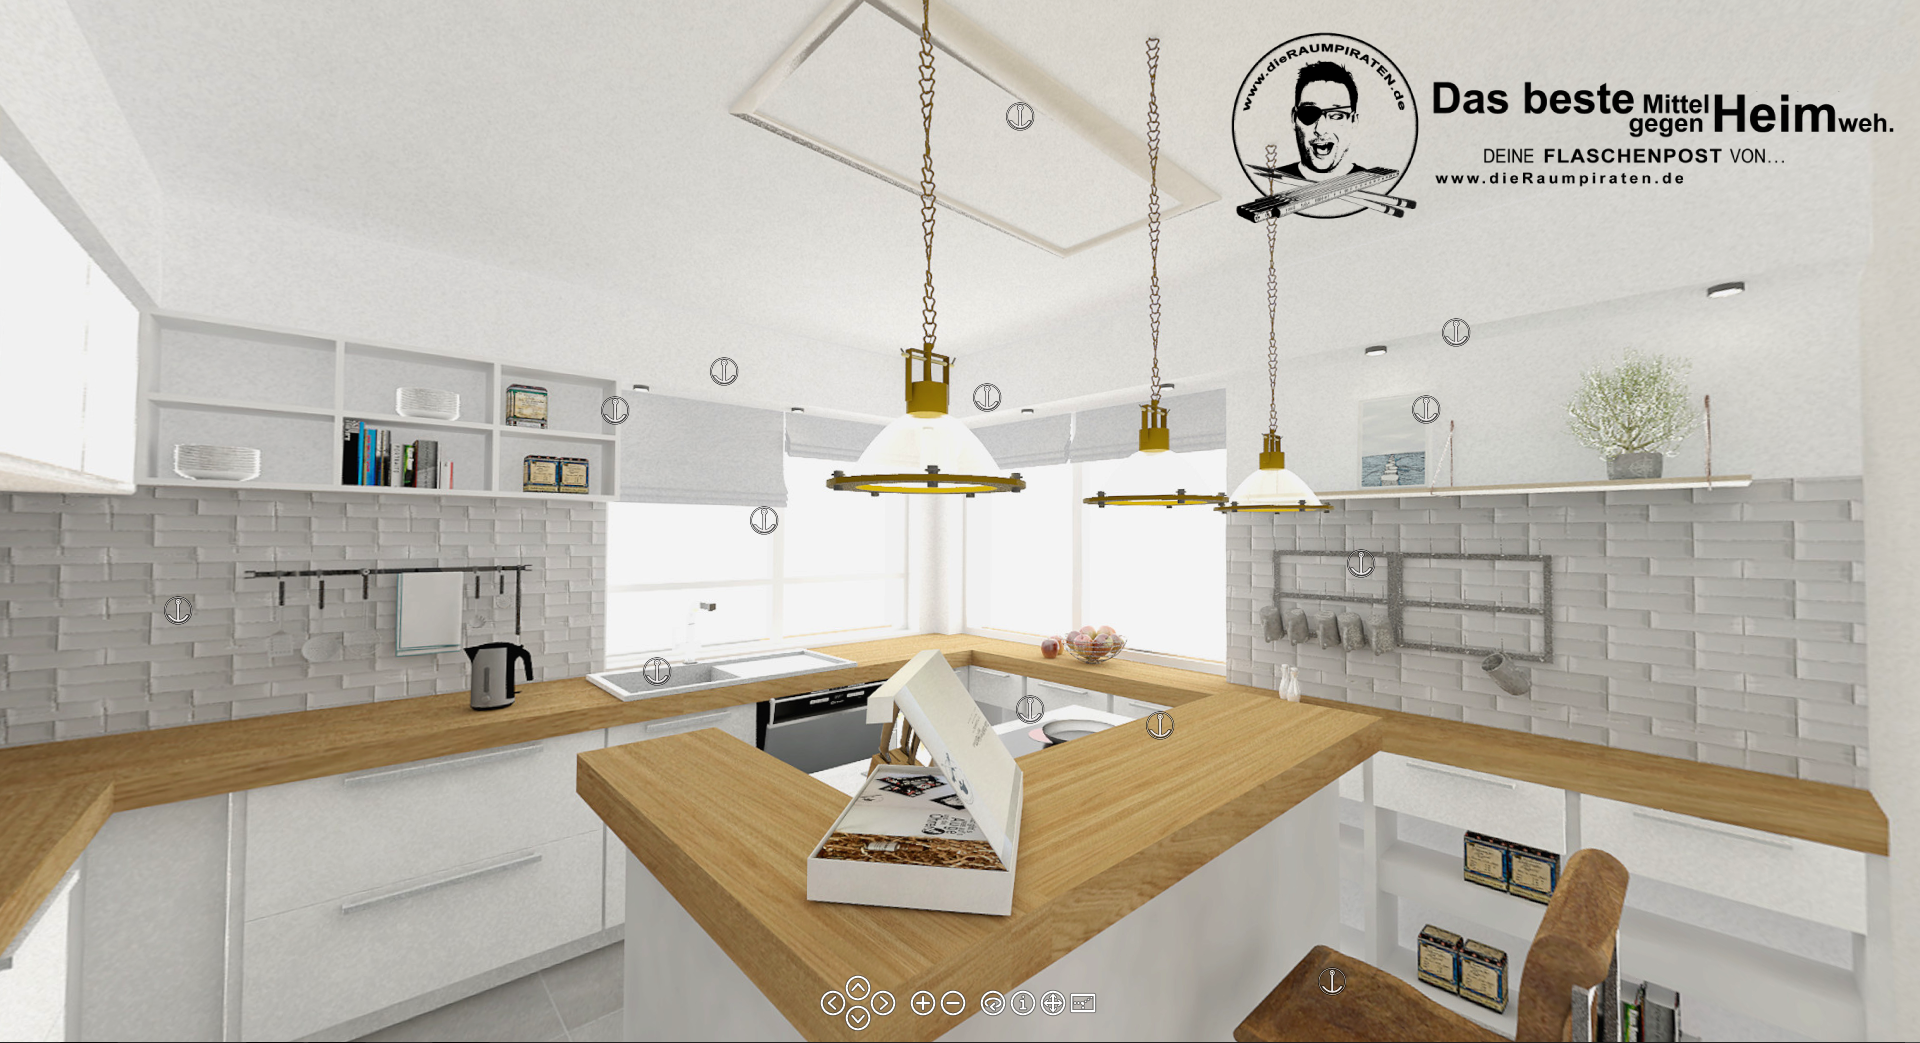 Küche mit Metrofliesen #Küche #Metrofliesen #Küchenblock #Arbeitsplatte #Massivholz